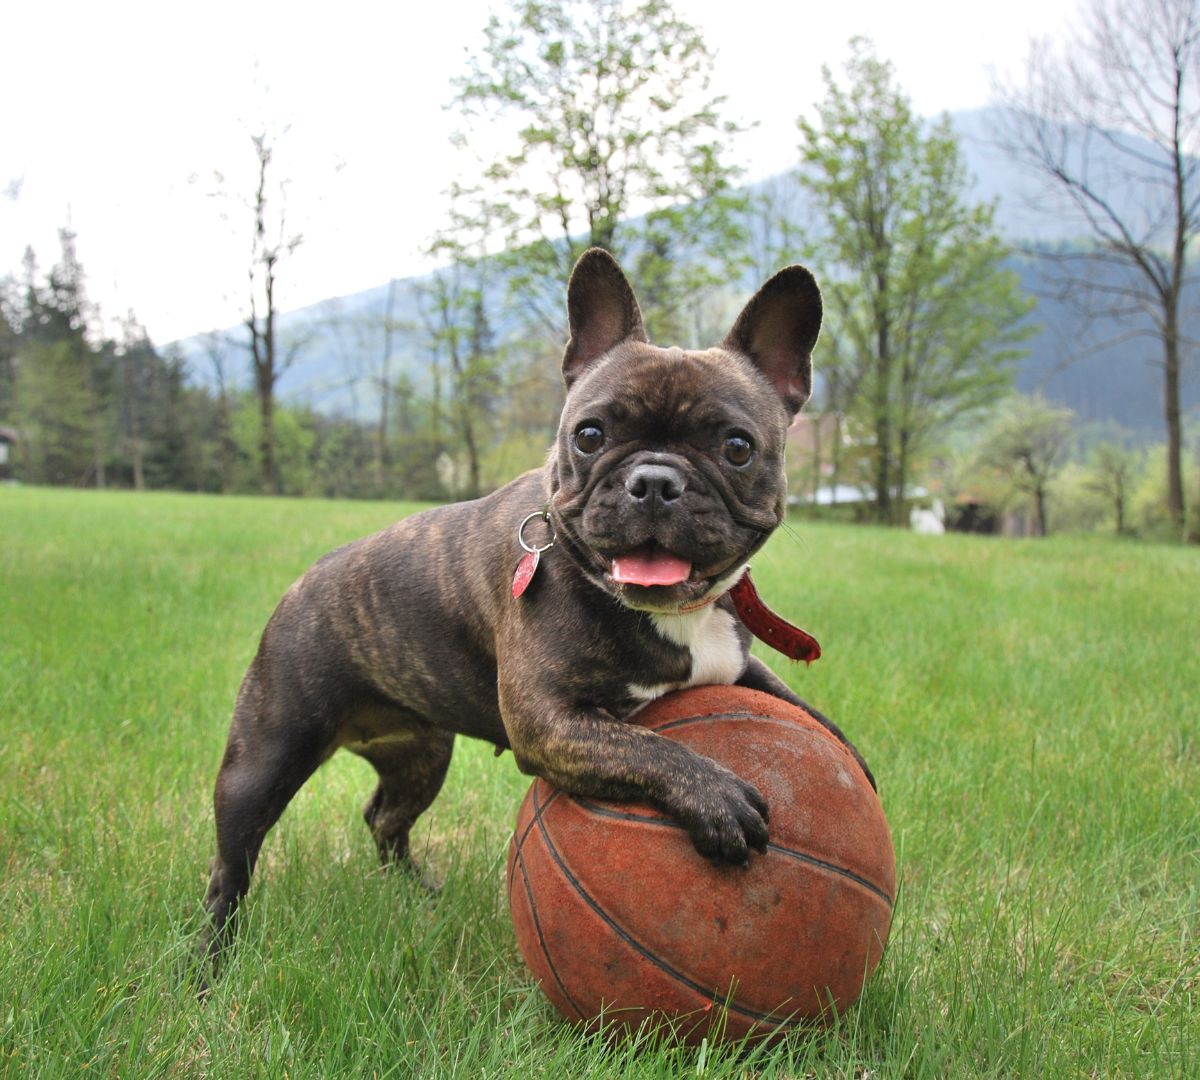 A dog holding a basketball